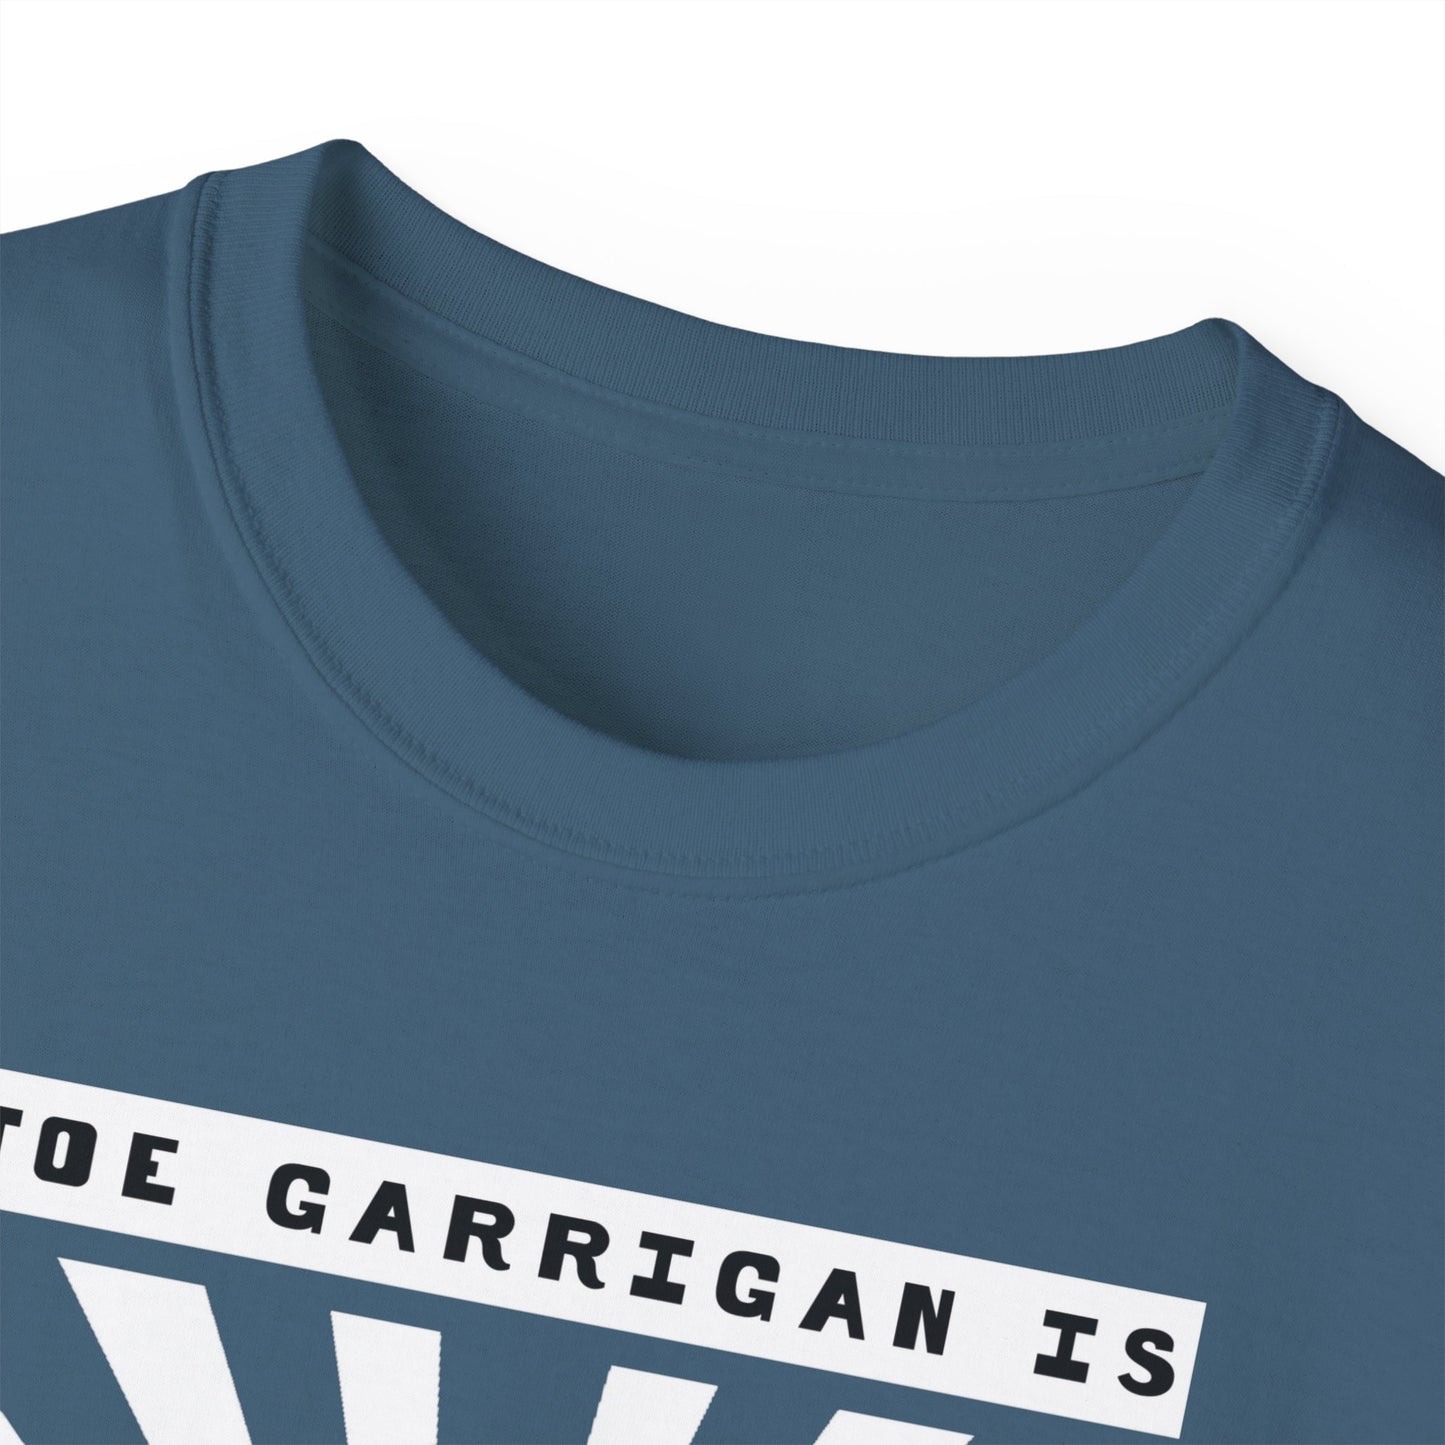 Joe Garrigan is My Friend - Burst -  Unisex Ultra Cotton Tee